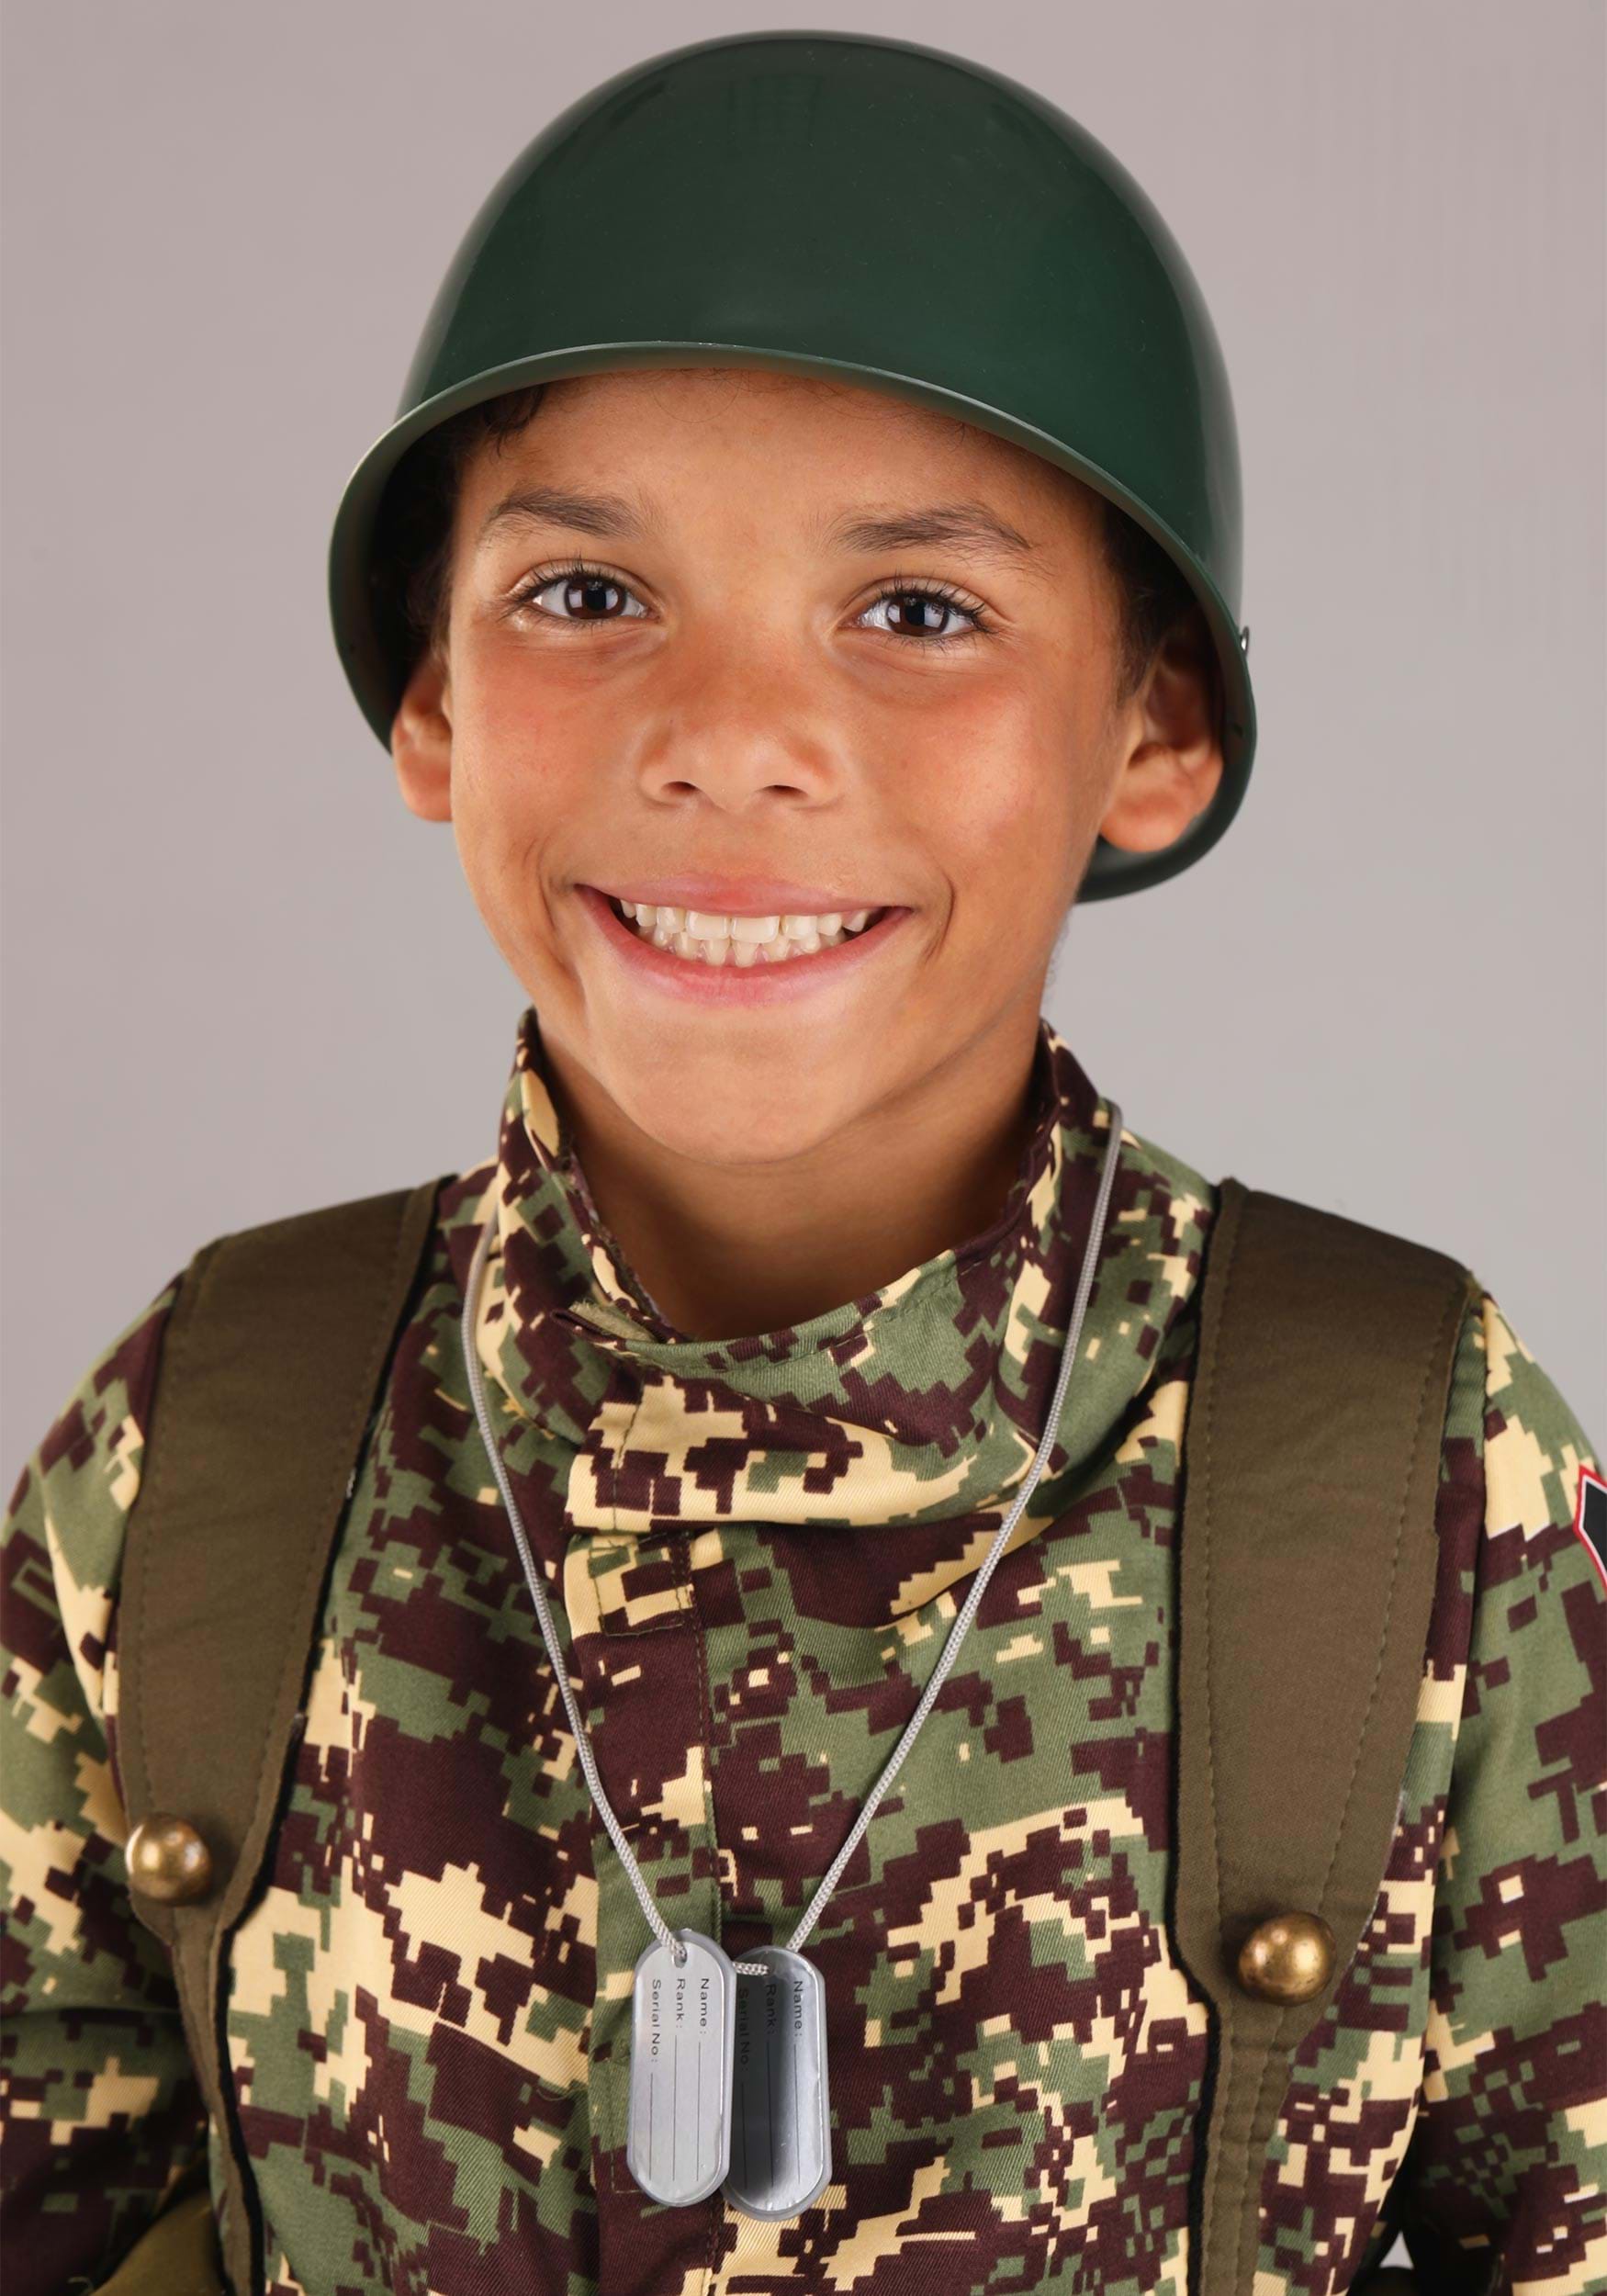 Kid's Soldier Prestige Costume